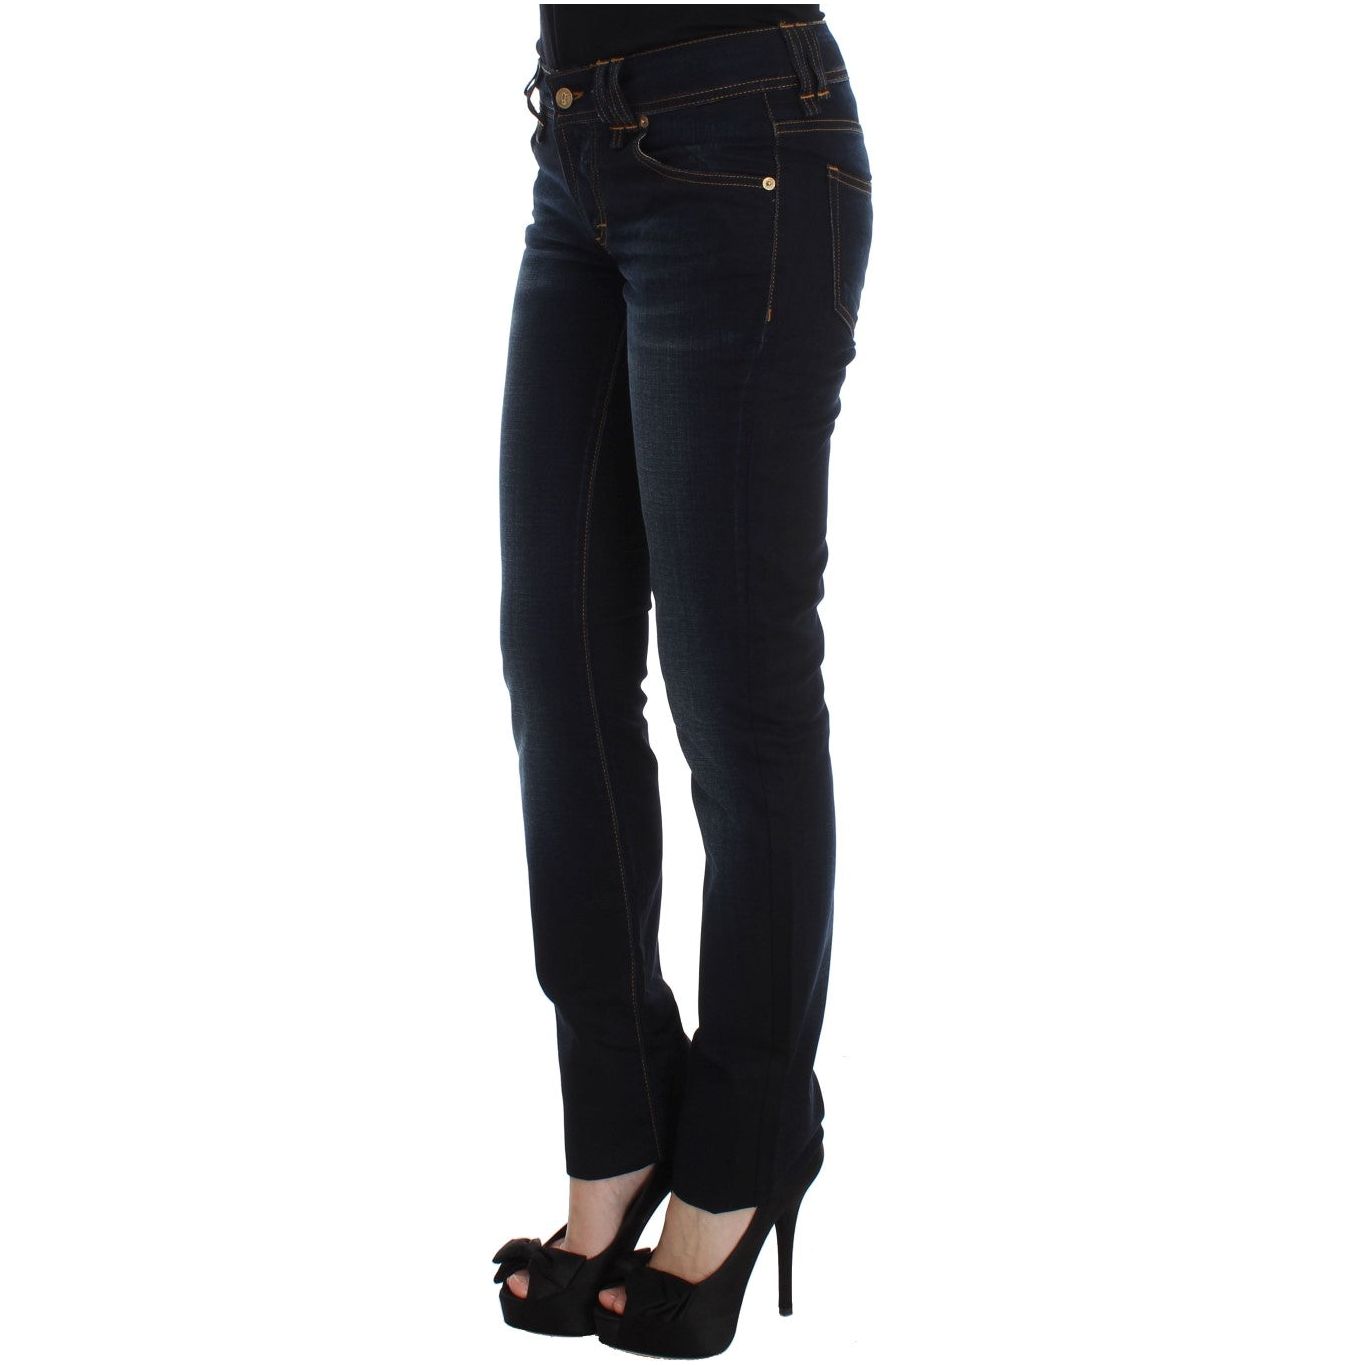 John Galliano Elegant Slim Fit Designer Jeans blue-wash-cotton-slim-fit-jeans-1 329959-blue-wash-cotton-slim-fit-jeans-2-1.jpg